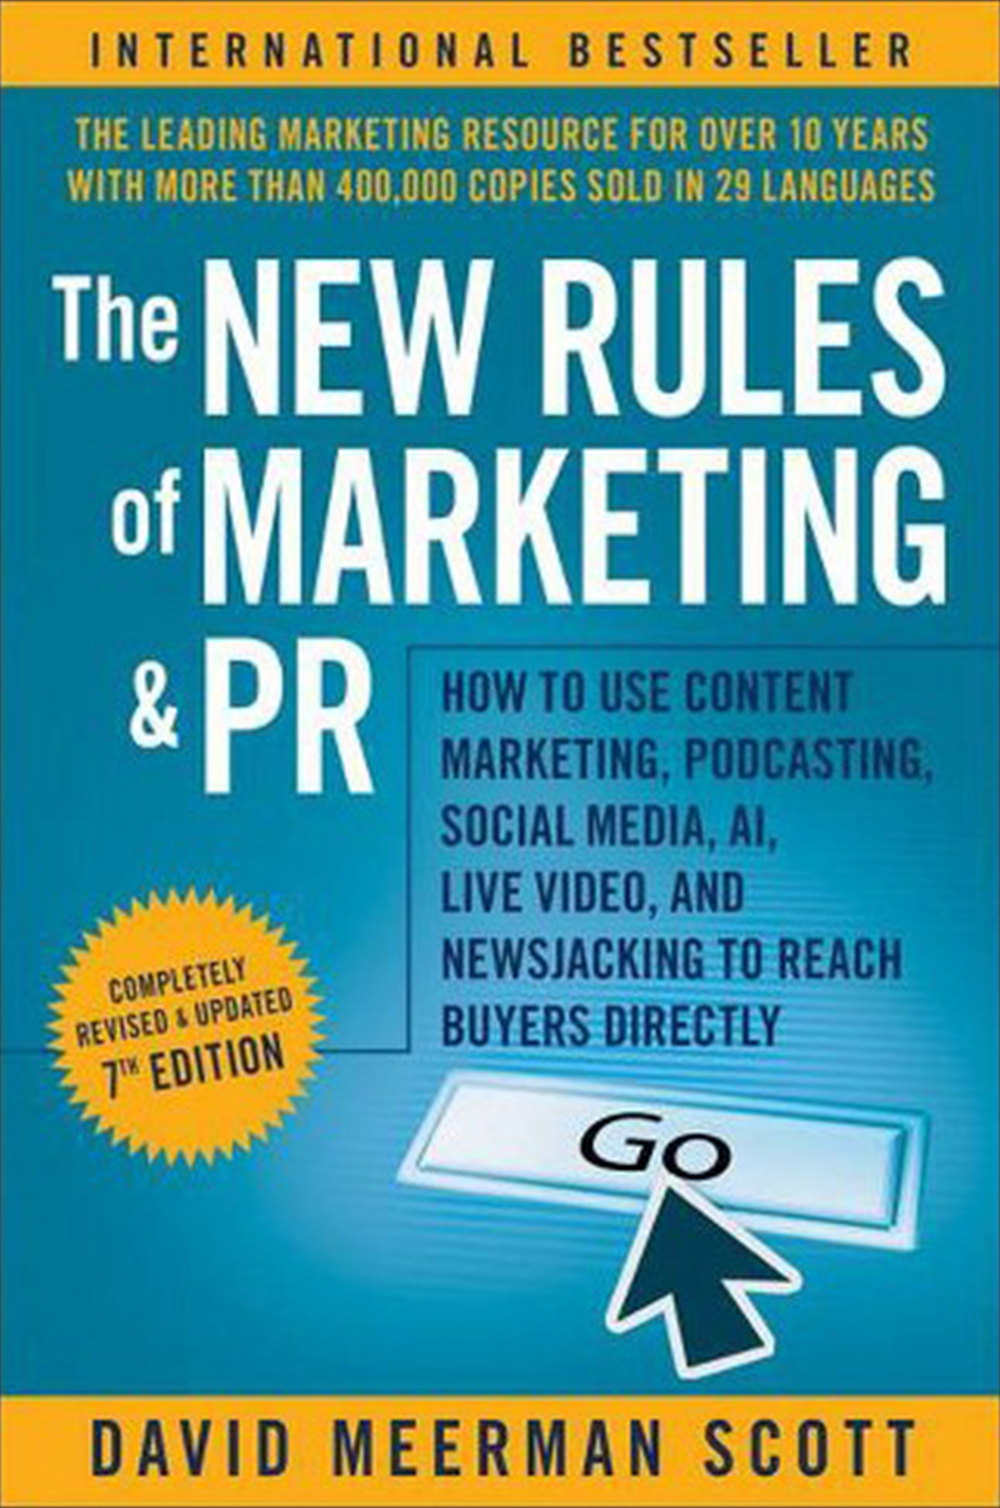 "New Rules of Marketing and Pr" by David Meerman Scott